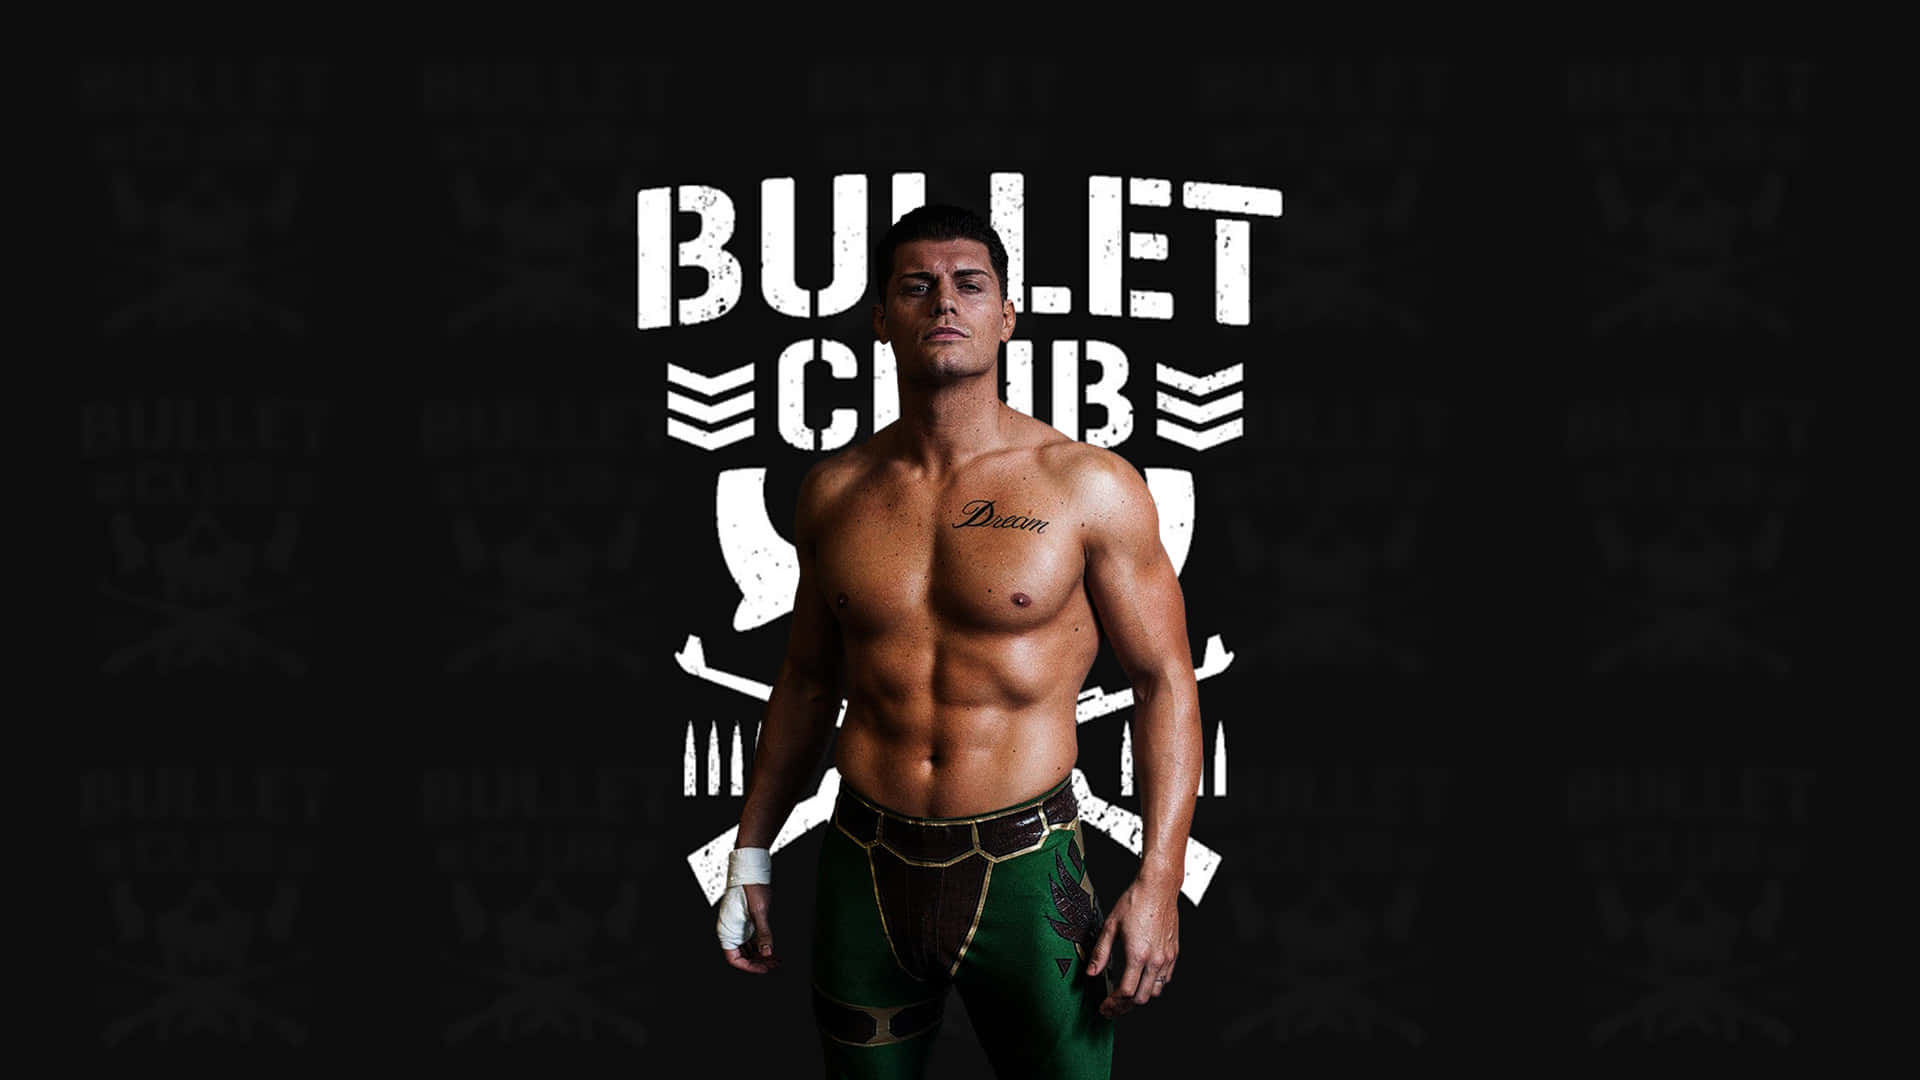 Codyrhodes Bullet Club Poster: Cody Rhodes Bullet Club-affisch. Wallpaper